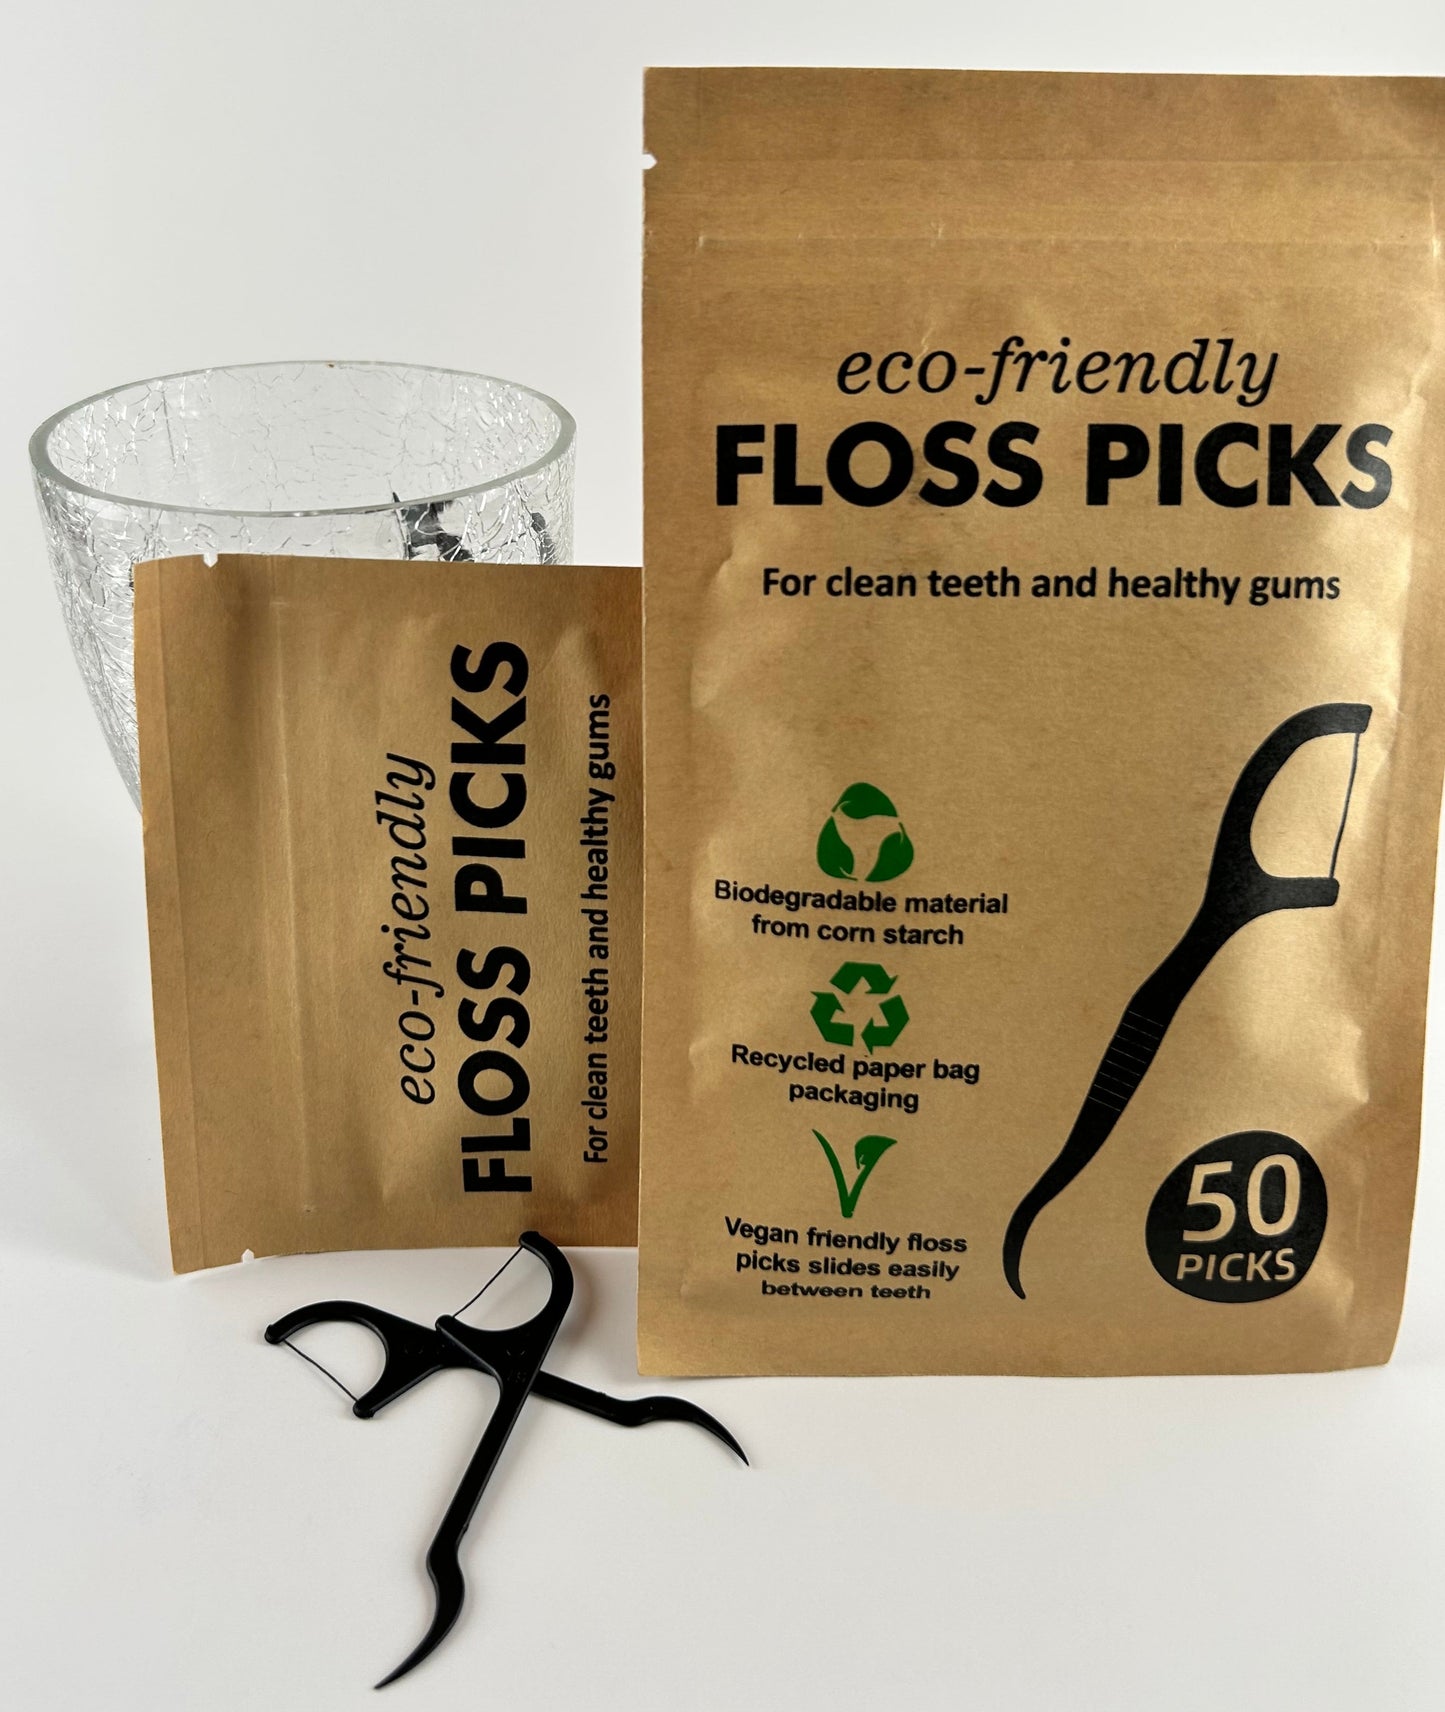 eco-friendly Floss Picks (100 Count) – Vegan Friendly, Eco-Friendly Natural Bamboo Charcoal Dental Floss Picks